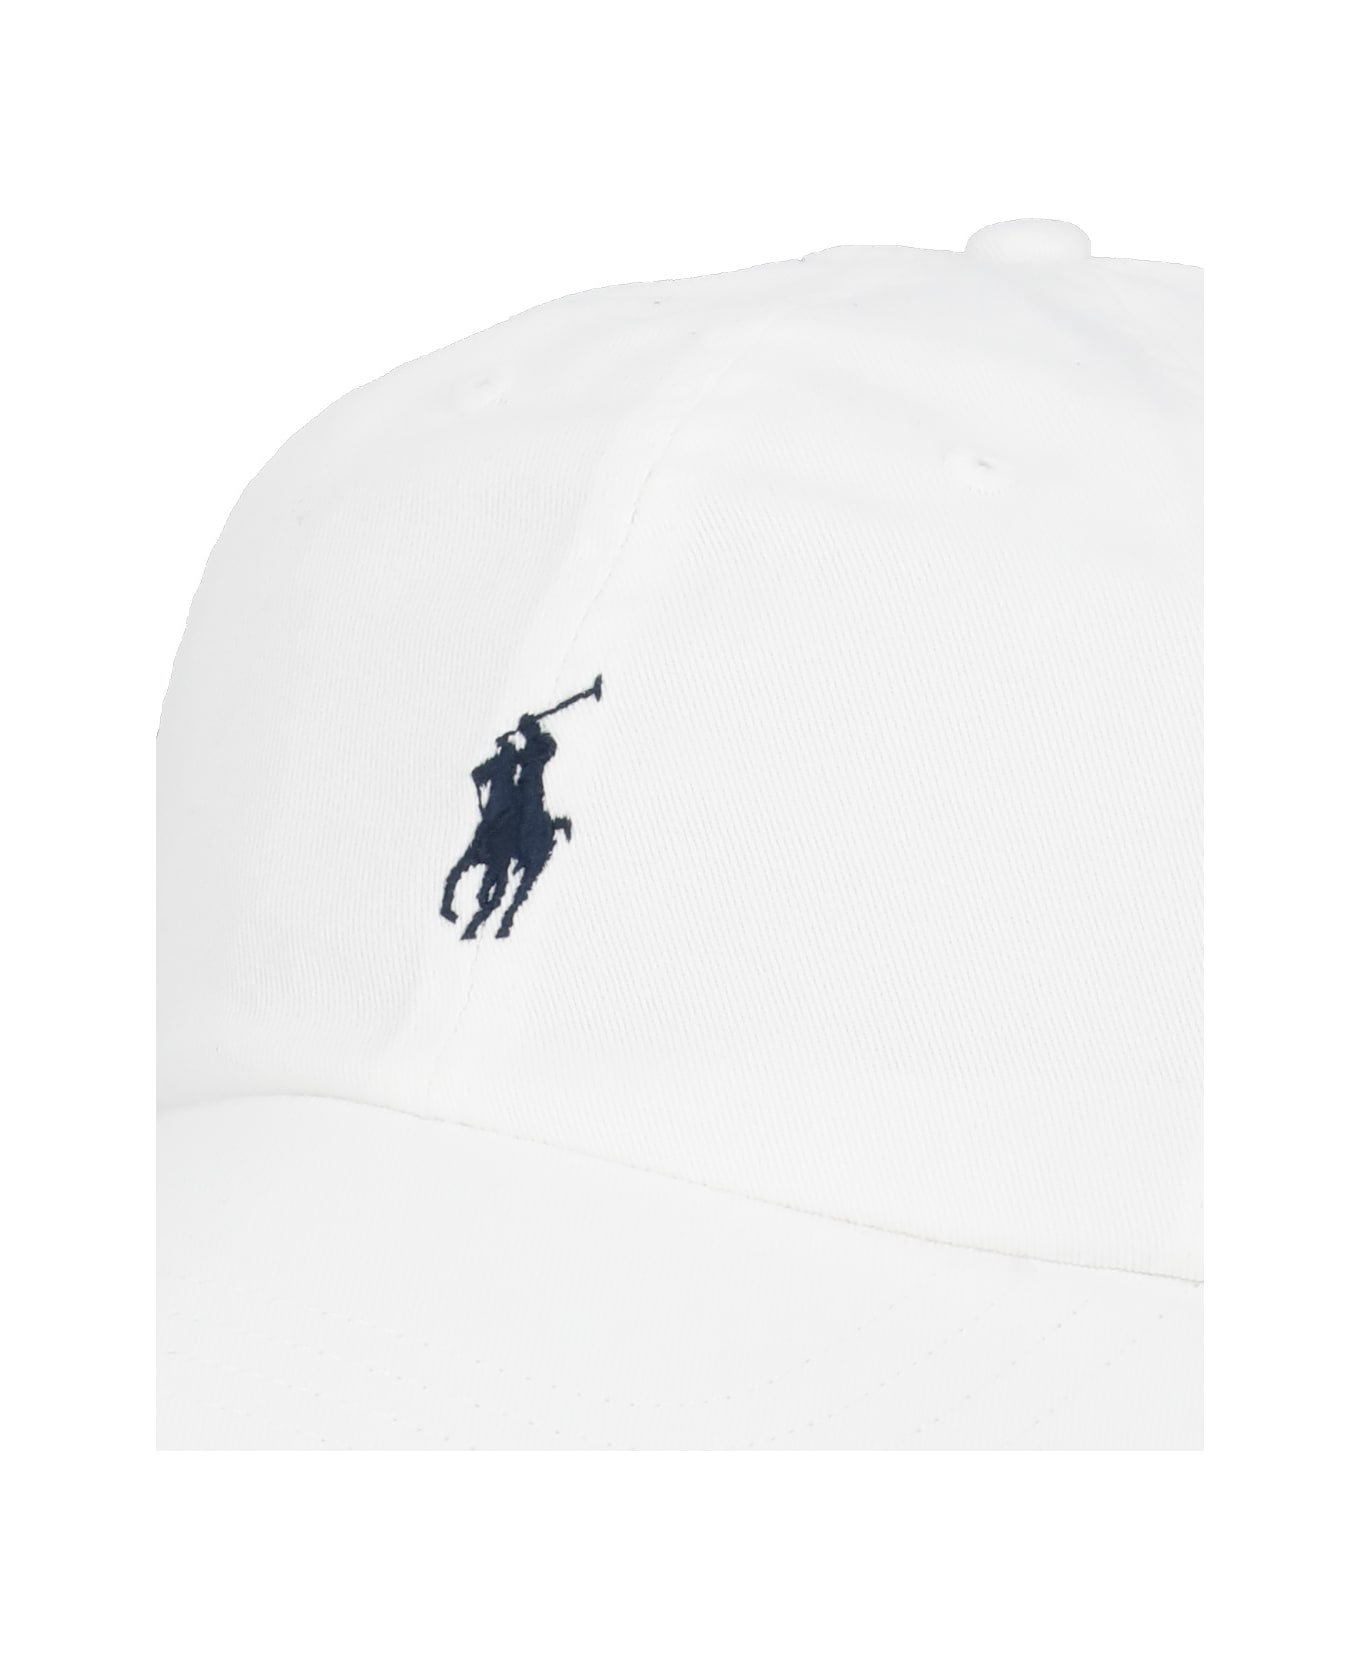 Ralph Lauren Baseball Hat With Pony - White